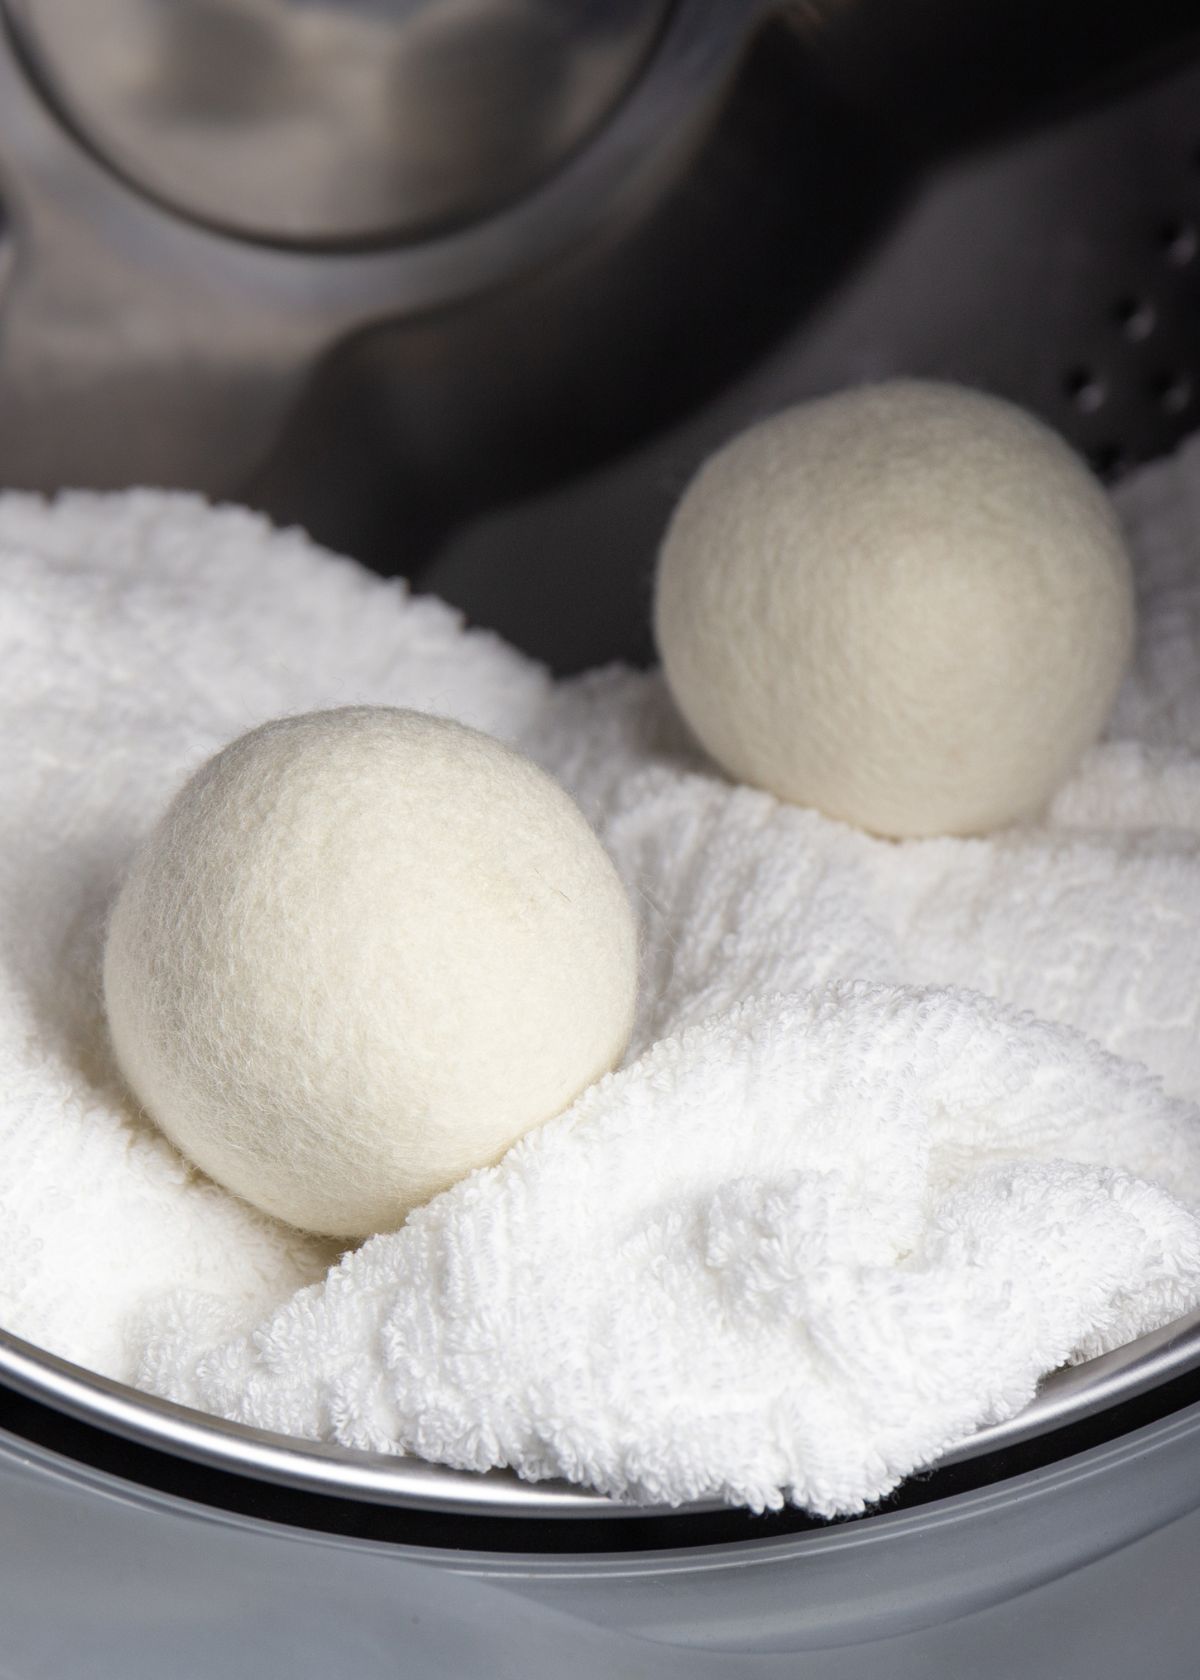 Wool dryer balls vs dryer sheets